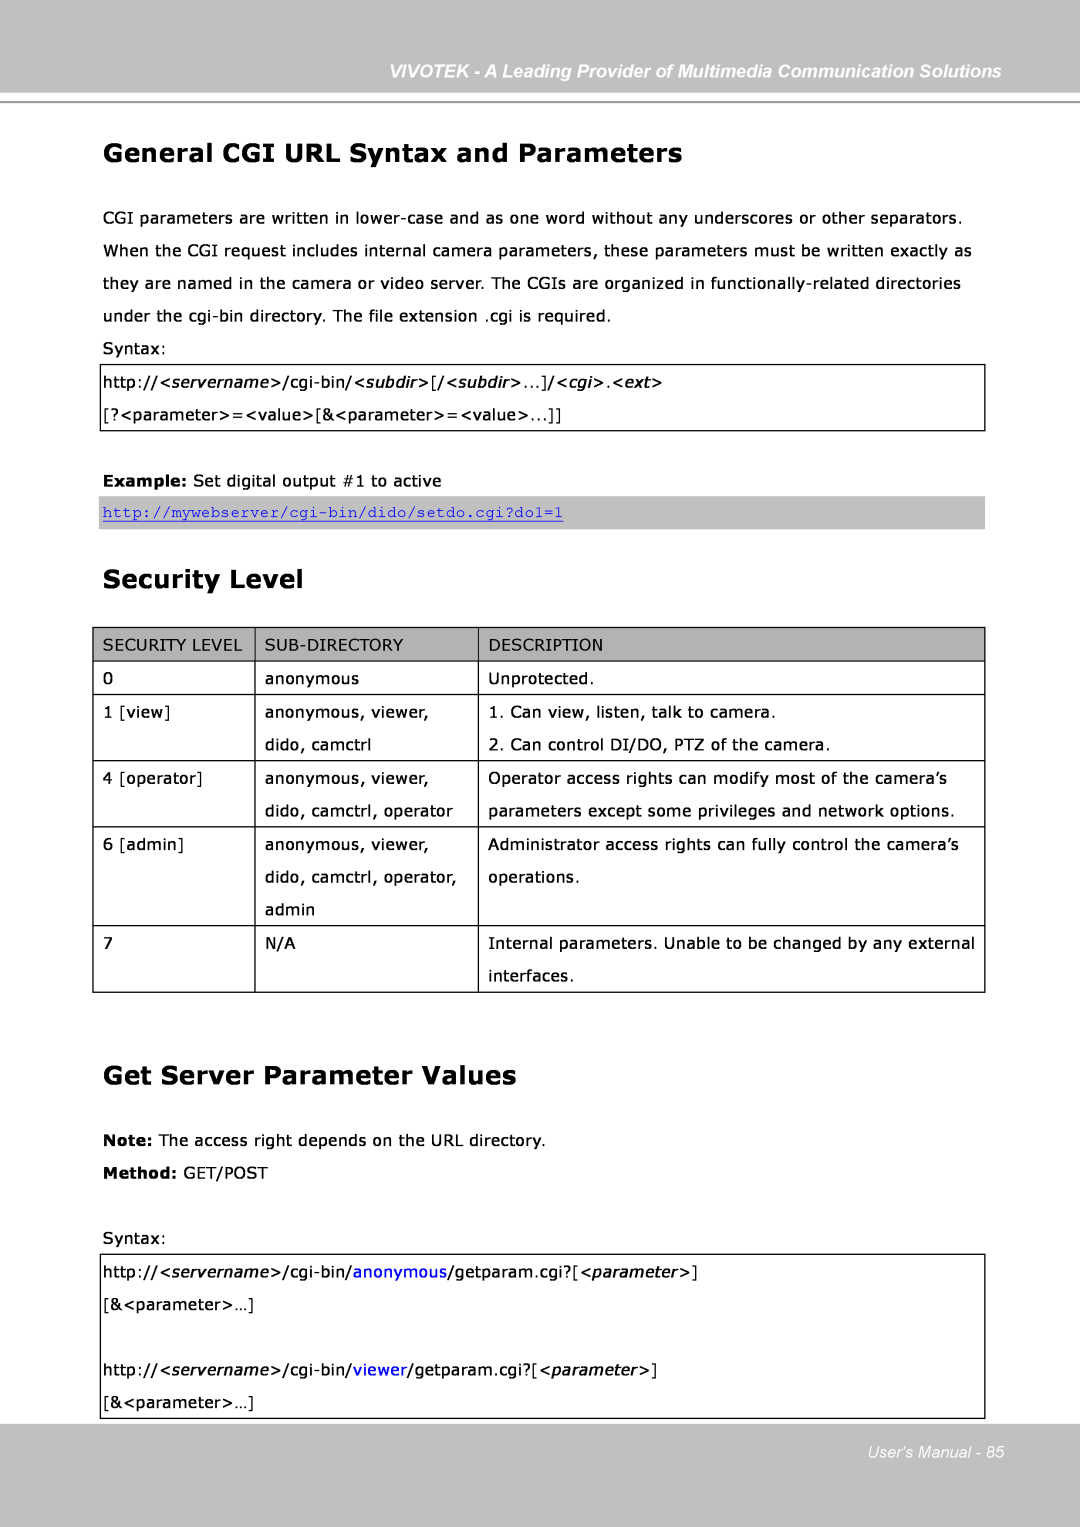 Vivotek IP7130 manual General CGI URL Syntax and Parameters, Security Level, Get Server Parameter Values, Method GET/POST 